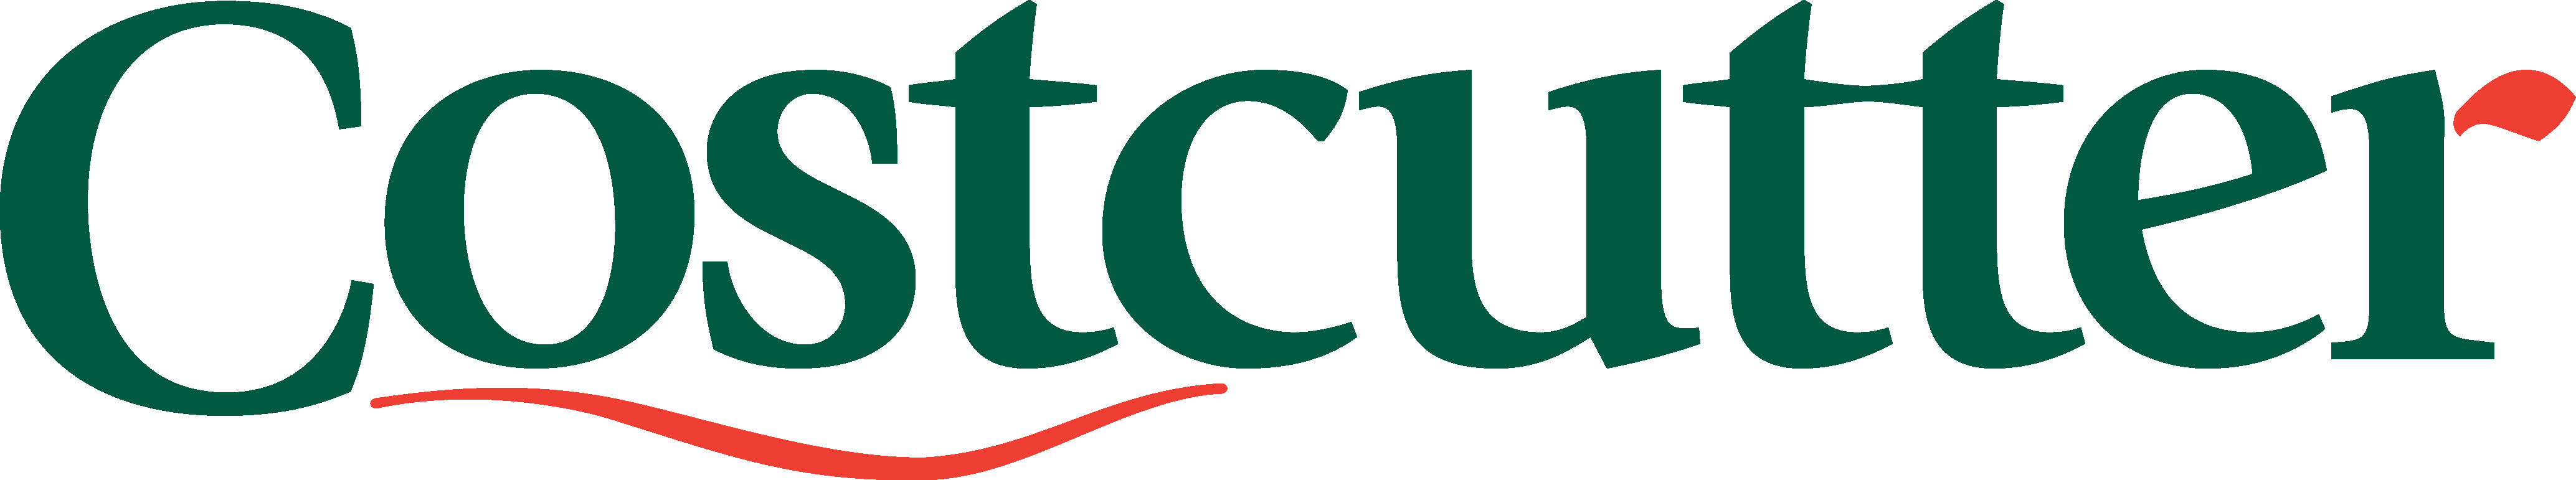 Costcutter Logo photo - 1